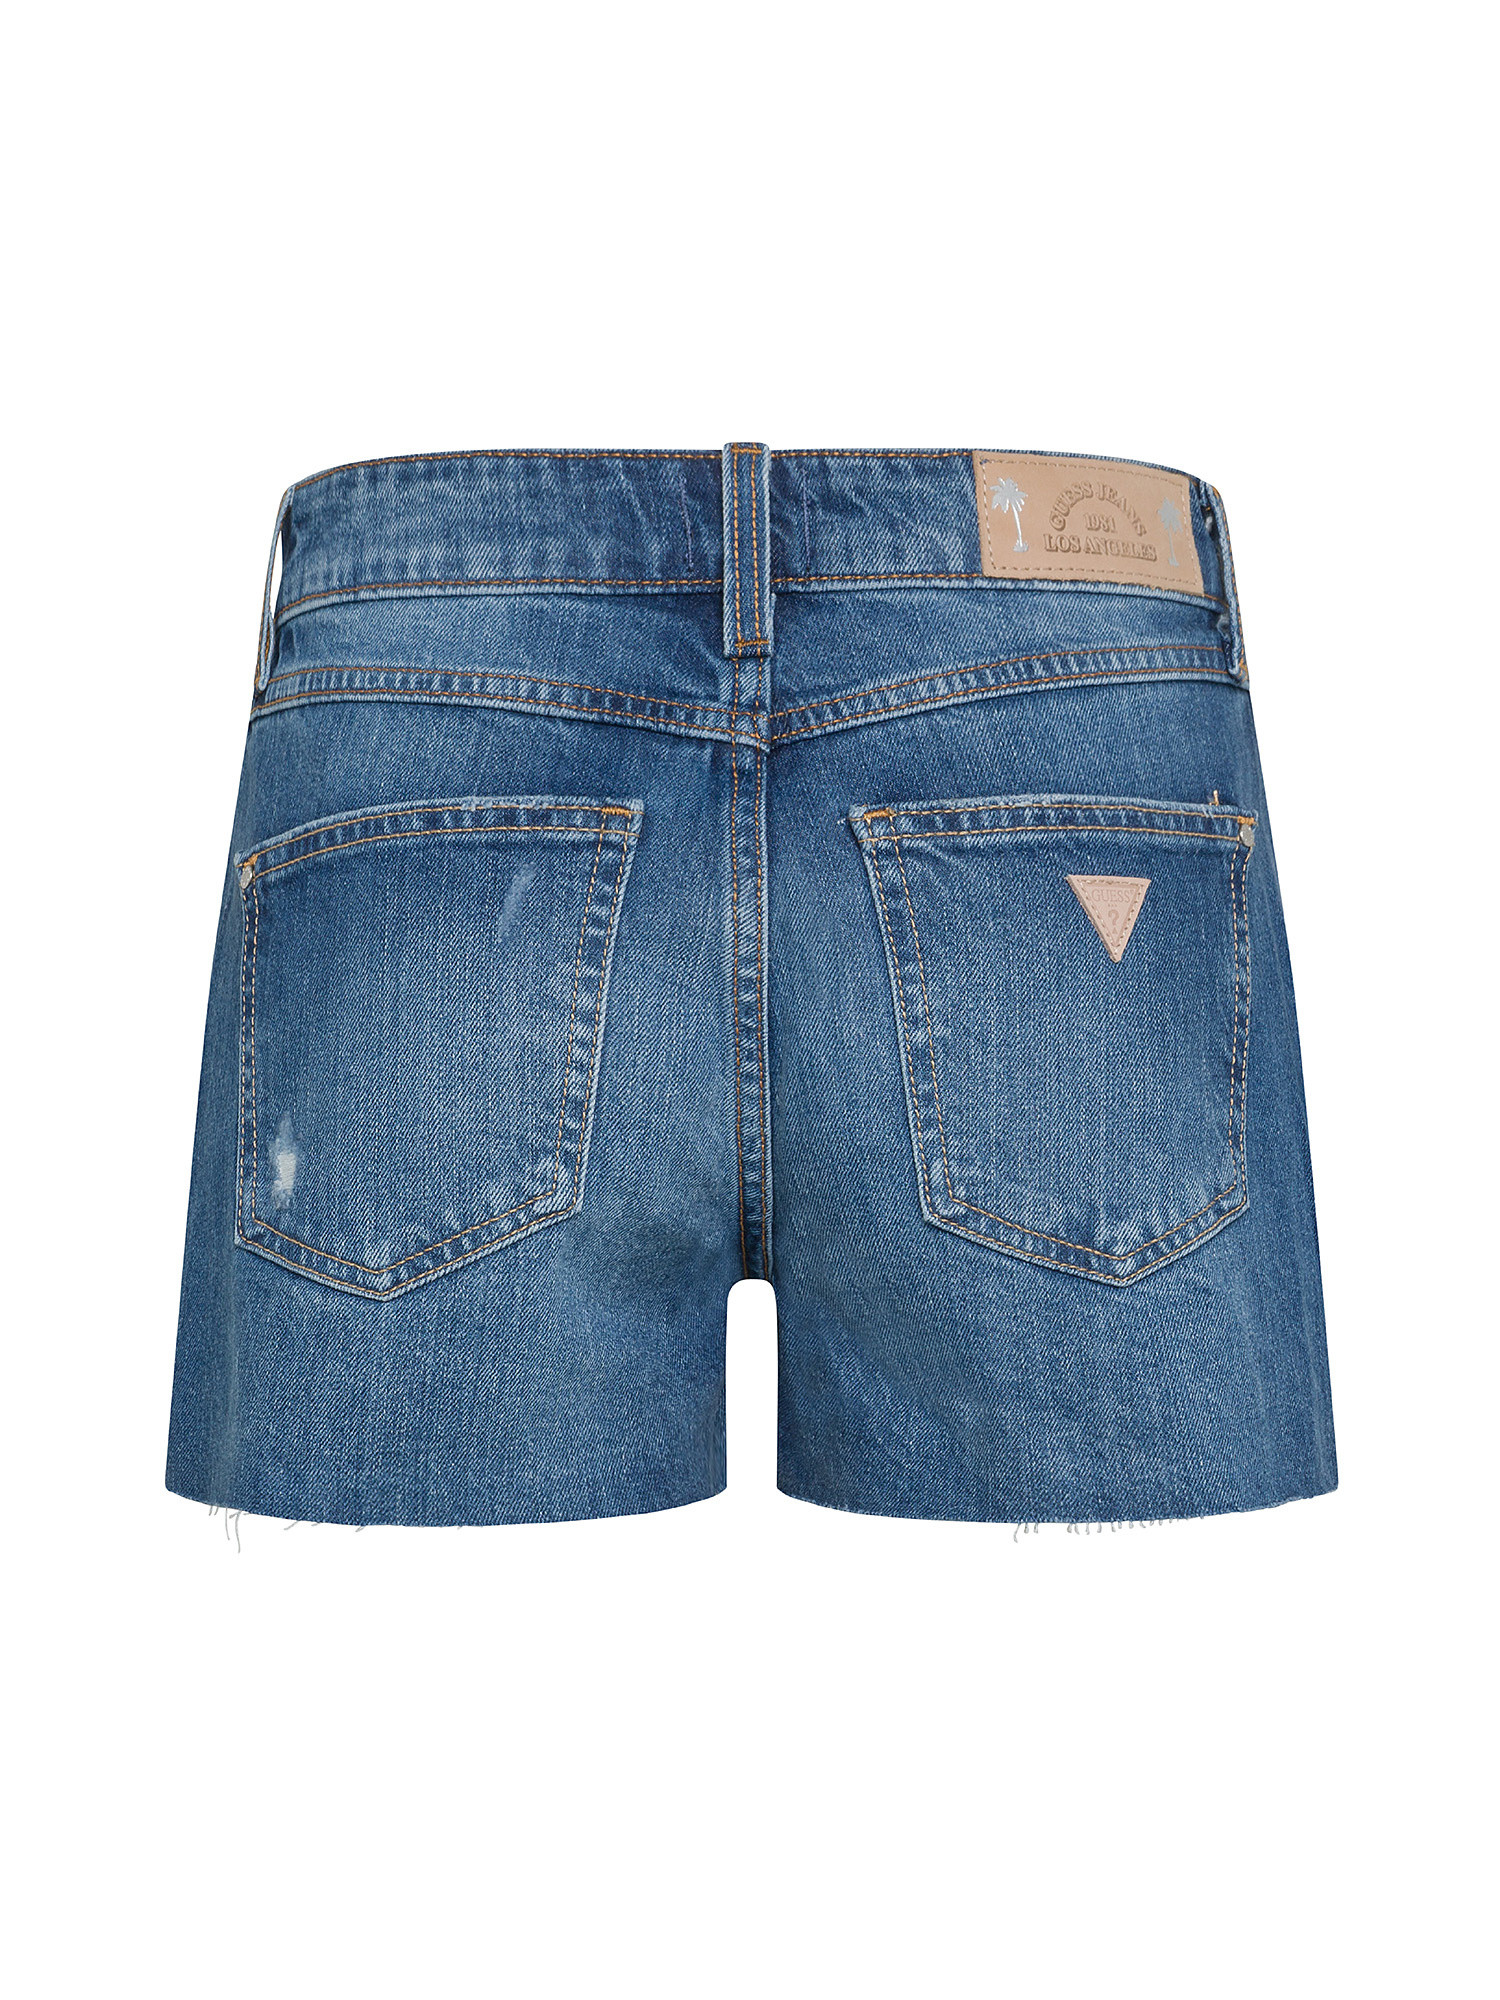 GUESS - Short in jeans a vita media, Denim, large image number 1